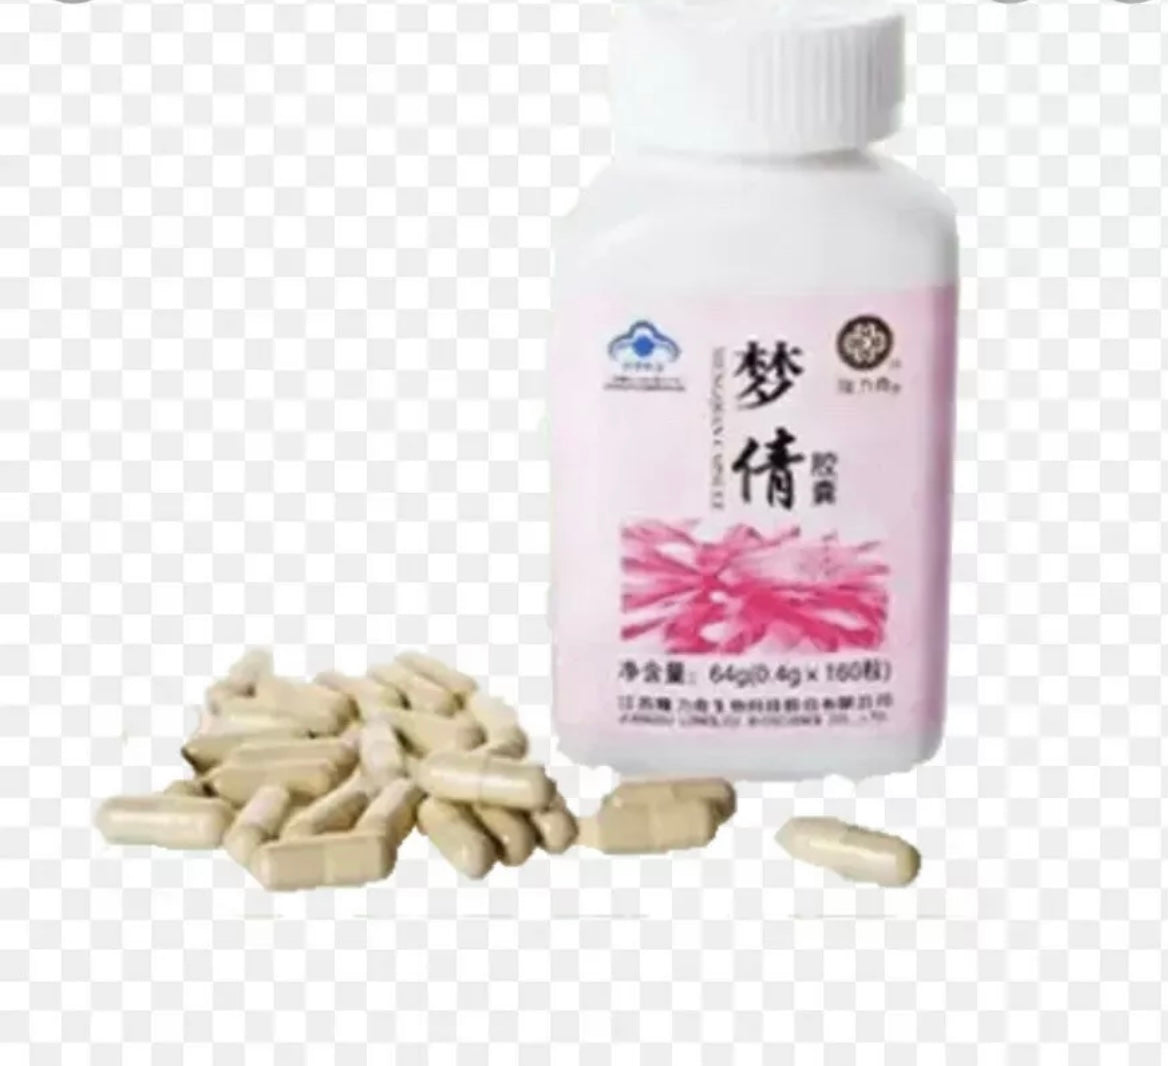 Longrich MENGQIAN( Dreamy Beauty Capsules )Hormone Balance - Female Dietary Supplement  160 Capsules